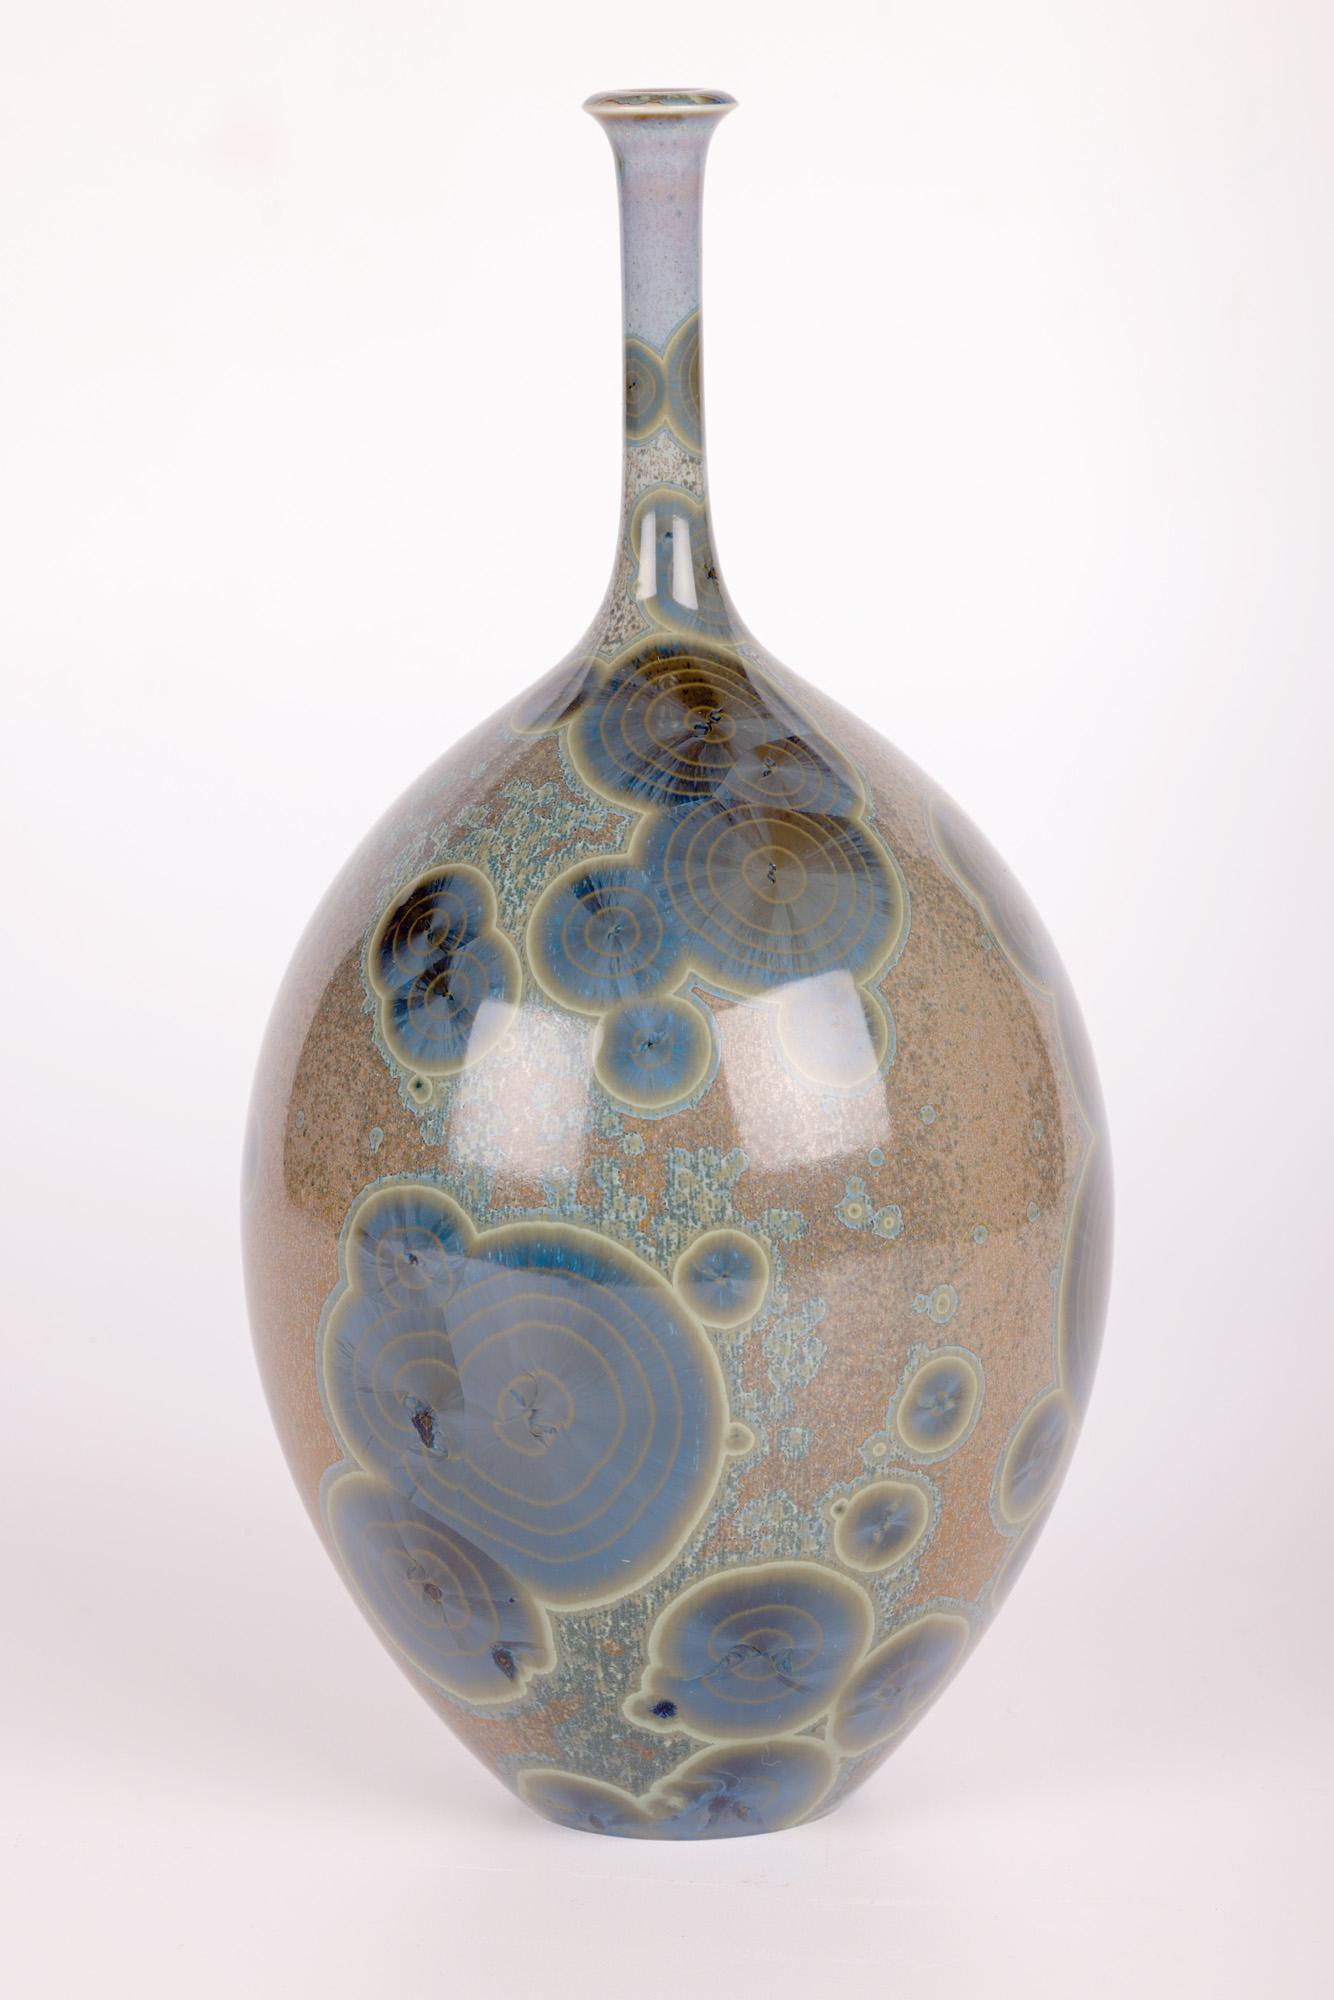 Peter Ilsley Crystalline Glazed Studio Pottery Porcelain Bottle Vase For Sale 9